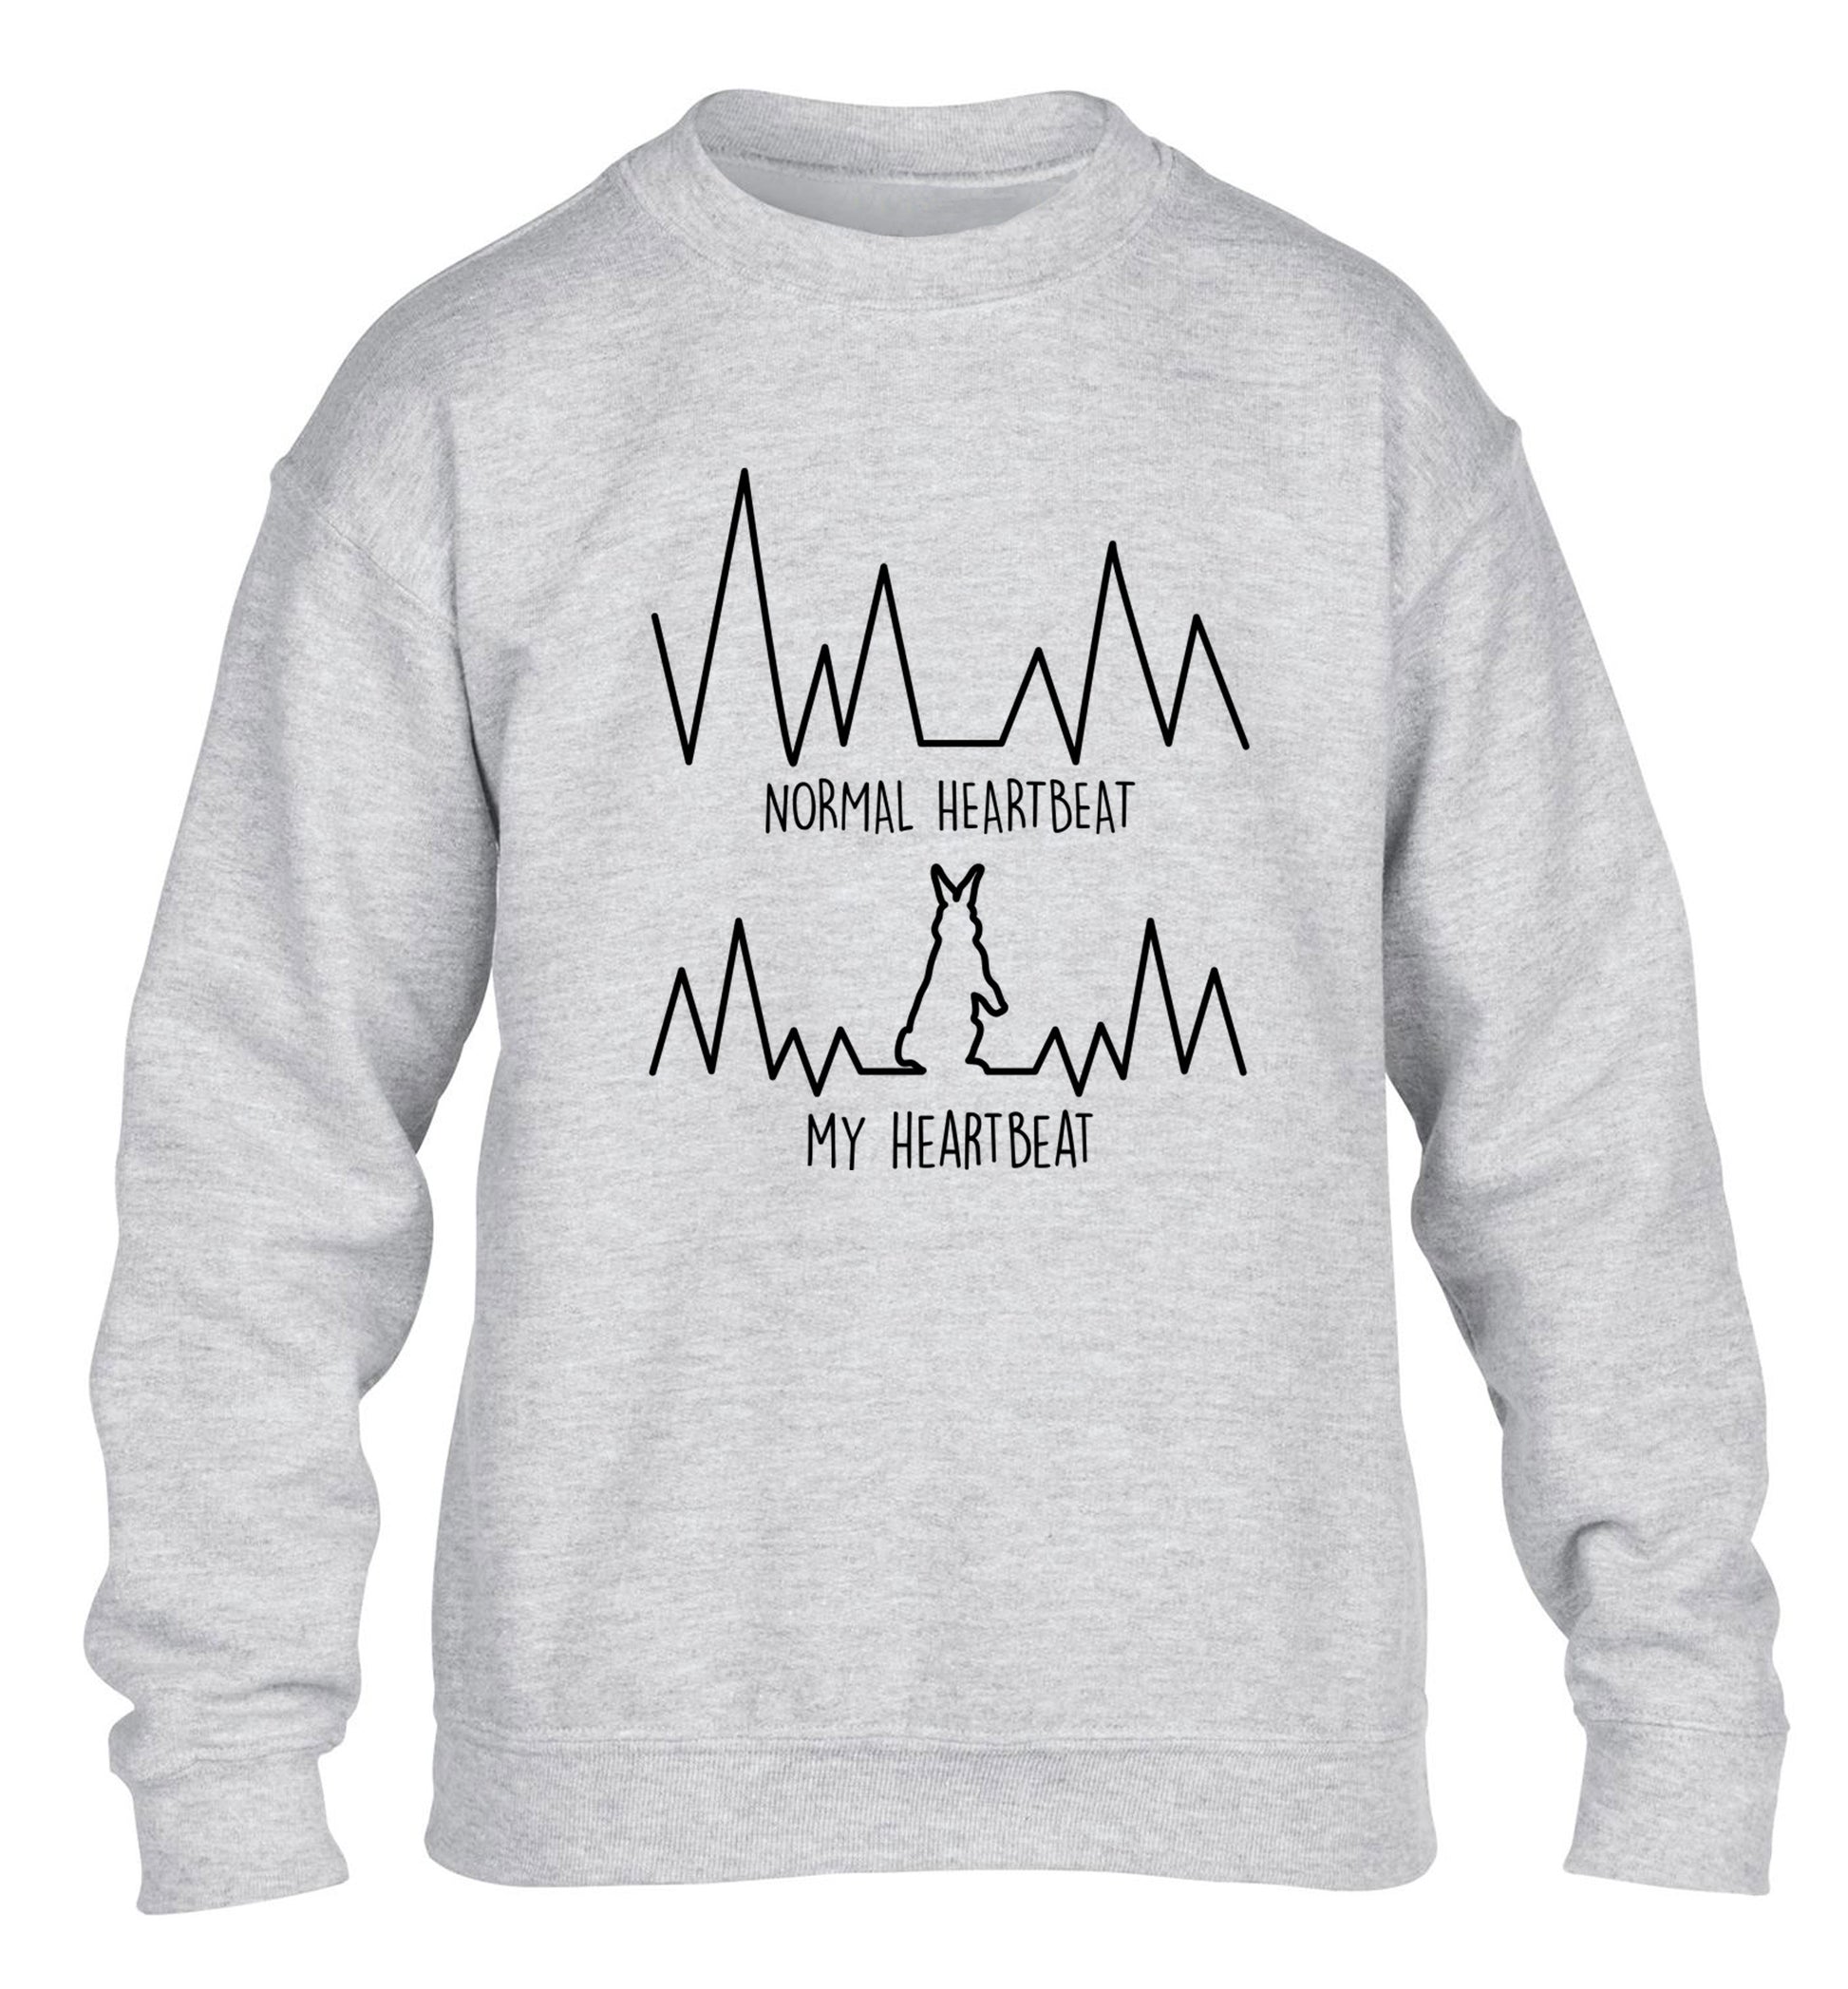 Normal heartbeat, my heartbeat rabbit lover children's grey  sweater 12-14 Years